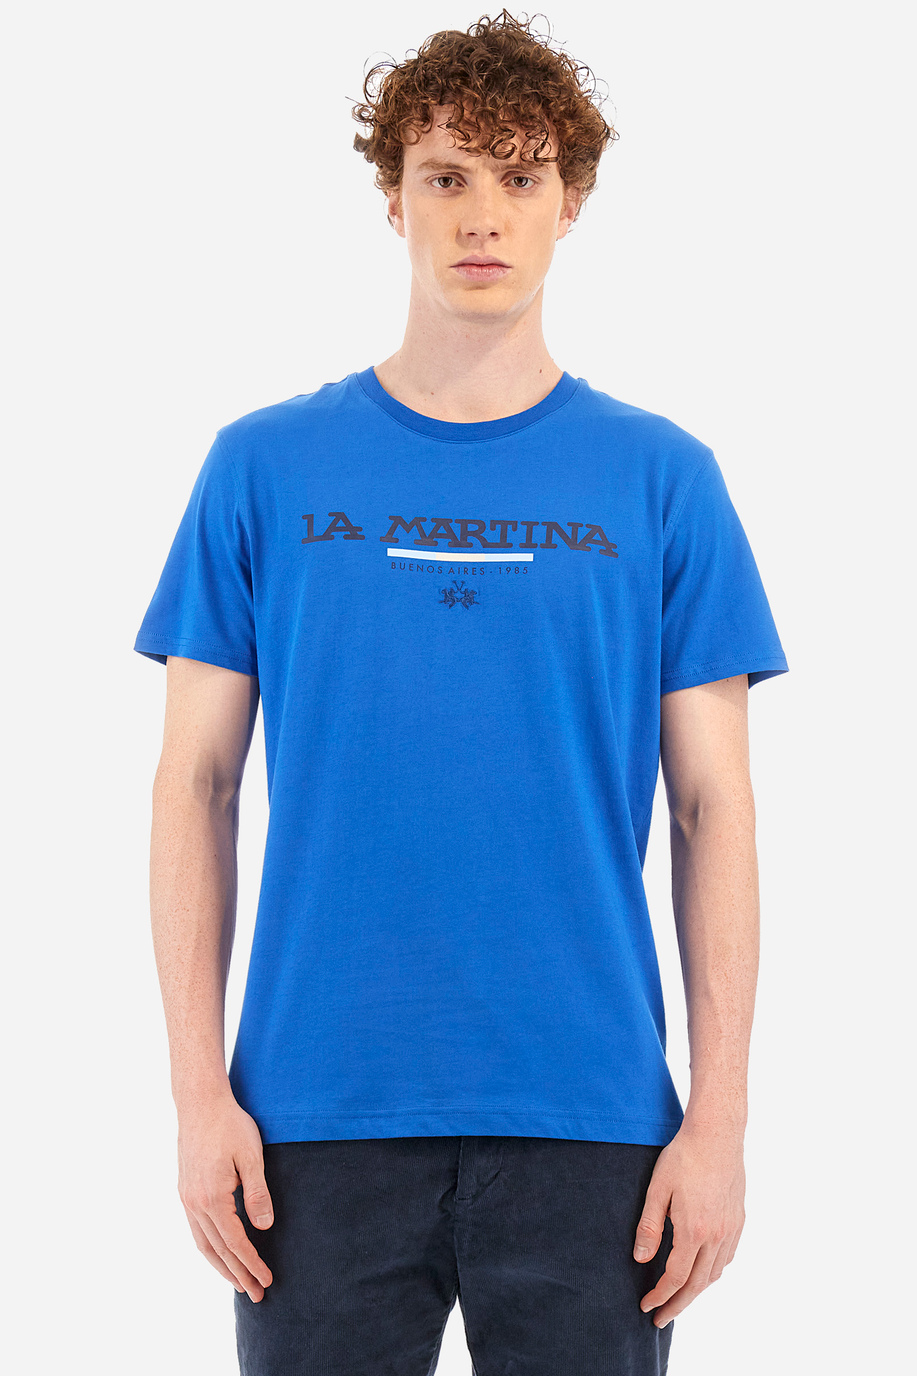 Tee-shirt homme coupe classique - Winford - T-shirts | La Martina - Official Online Shop